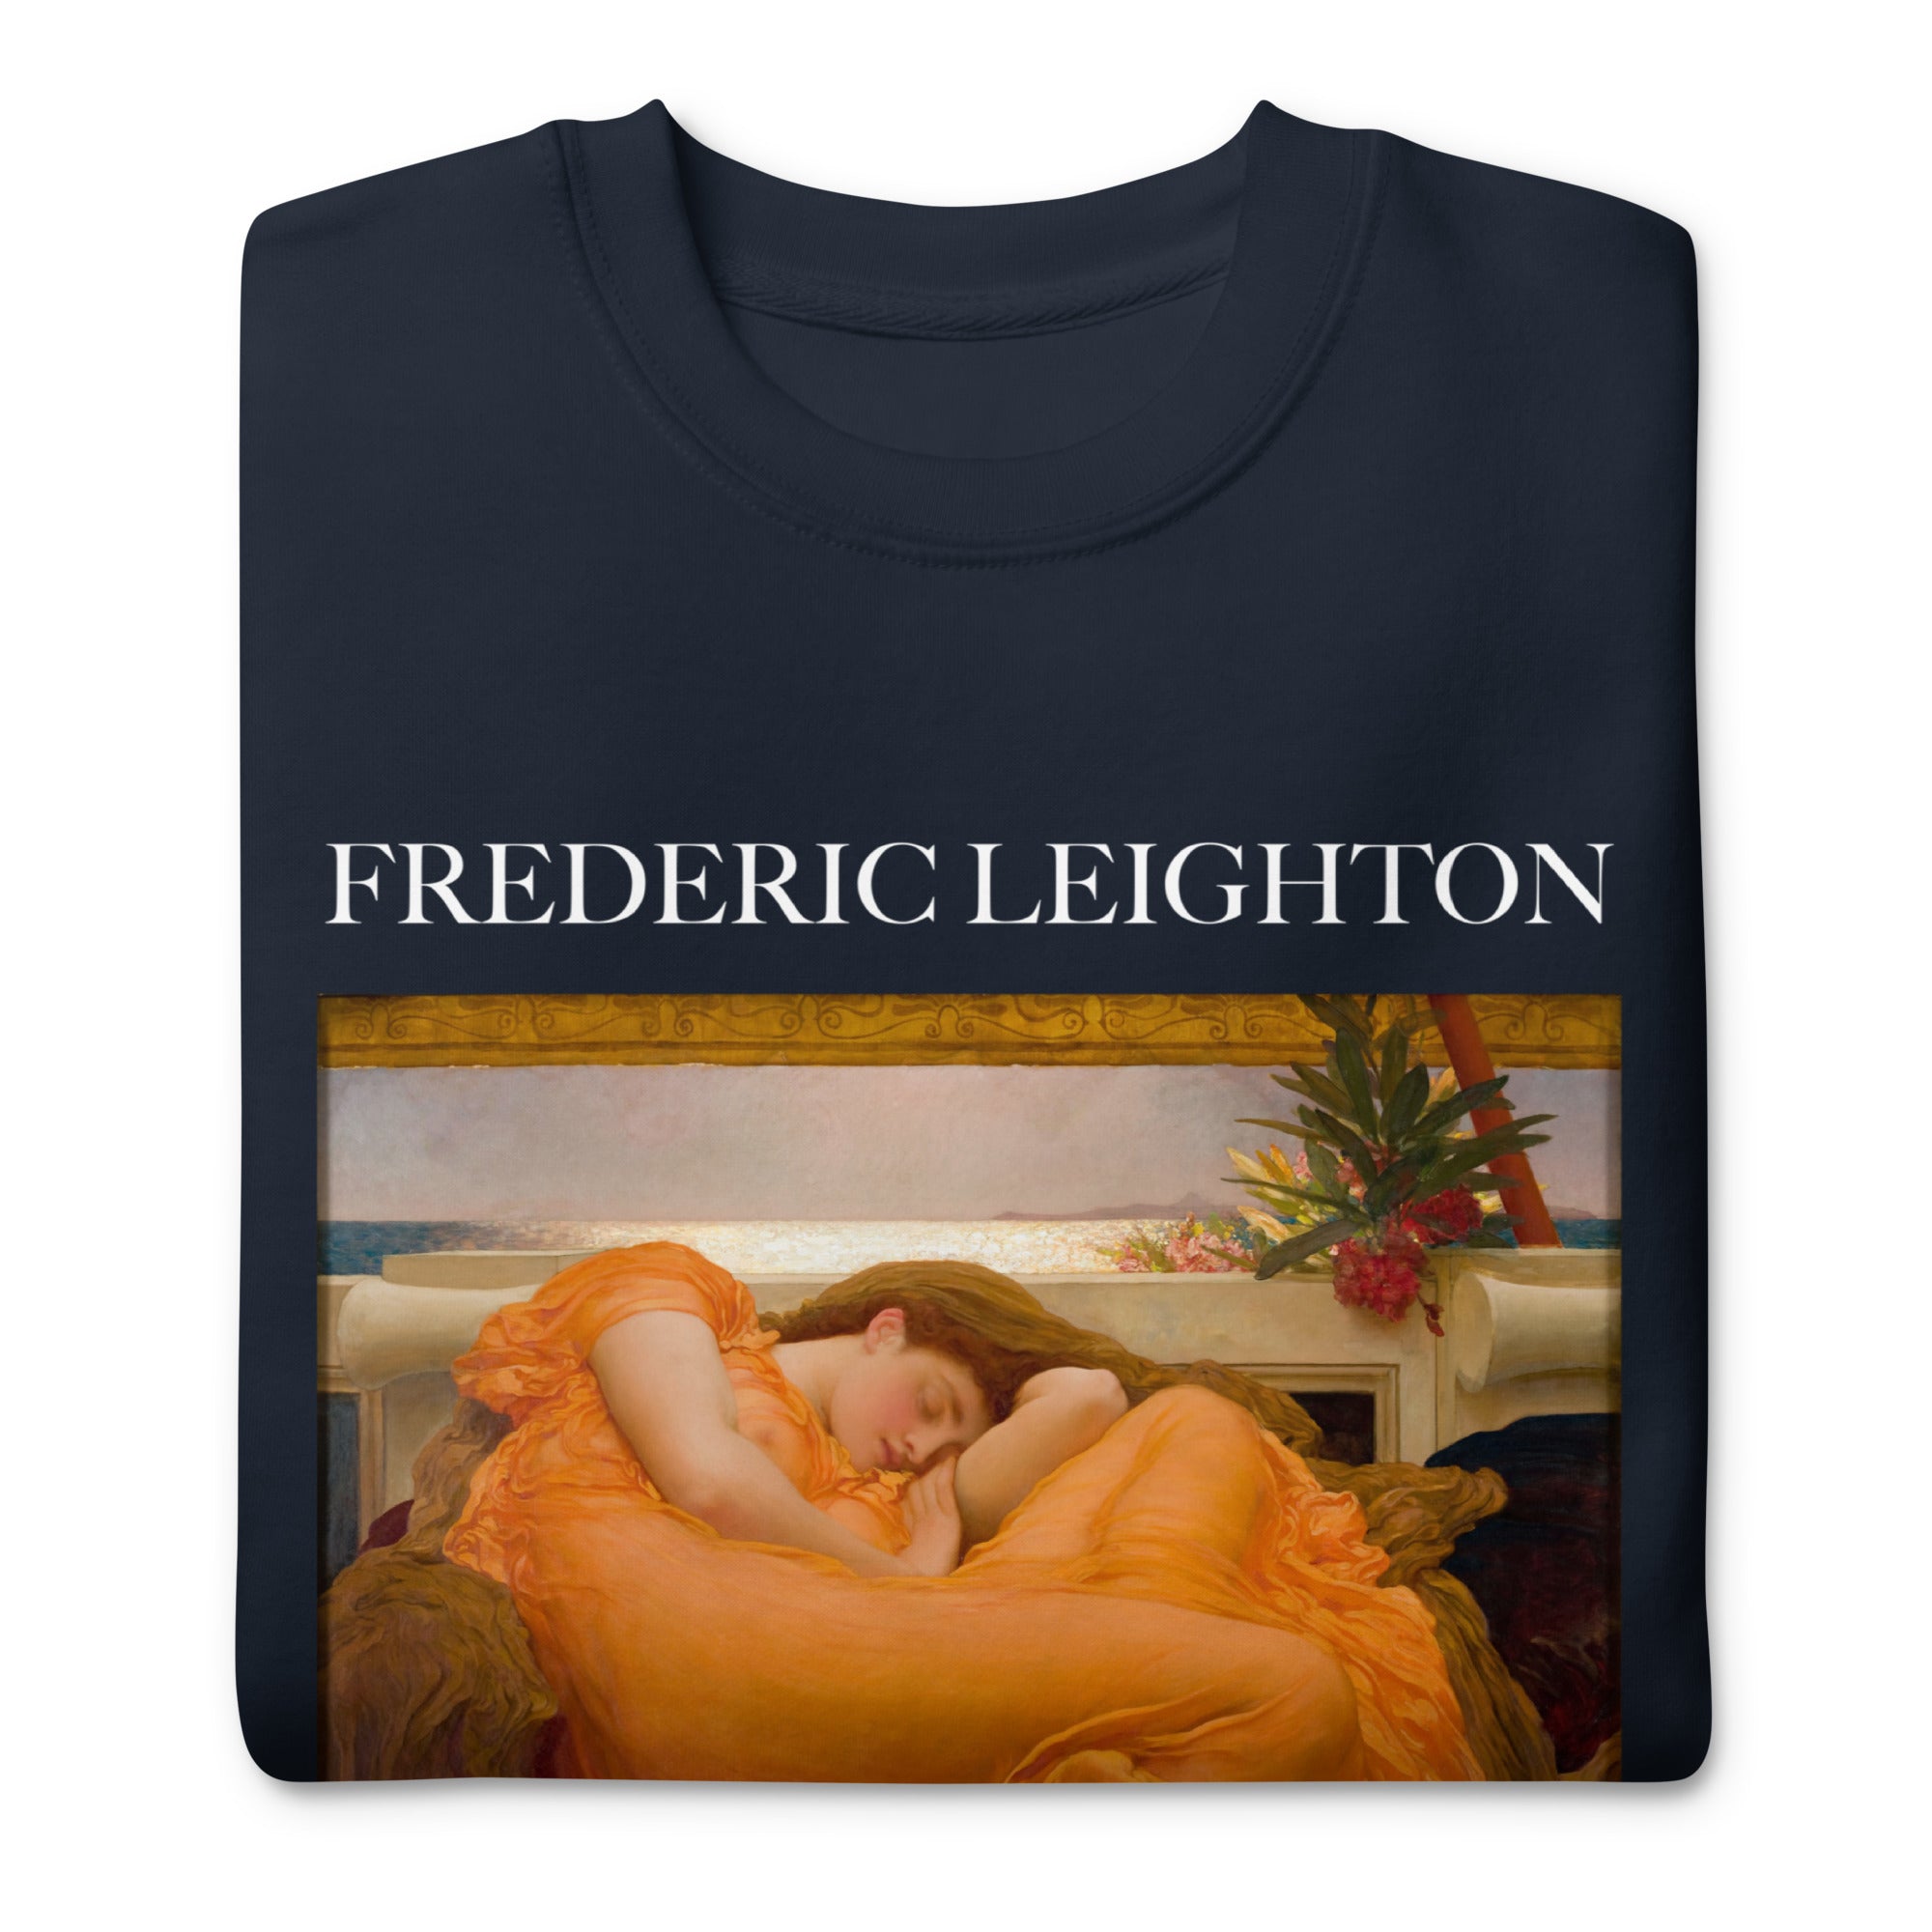 Frederic Leighton 'Flaming June' Famous Painting Sweatshirt | Unisex Premium Sweatshirt